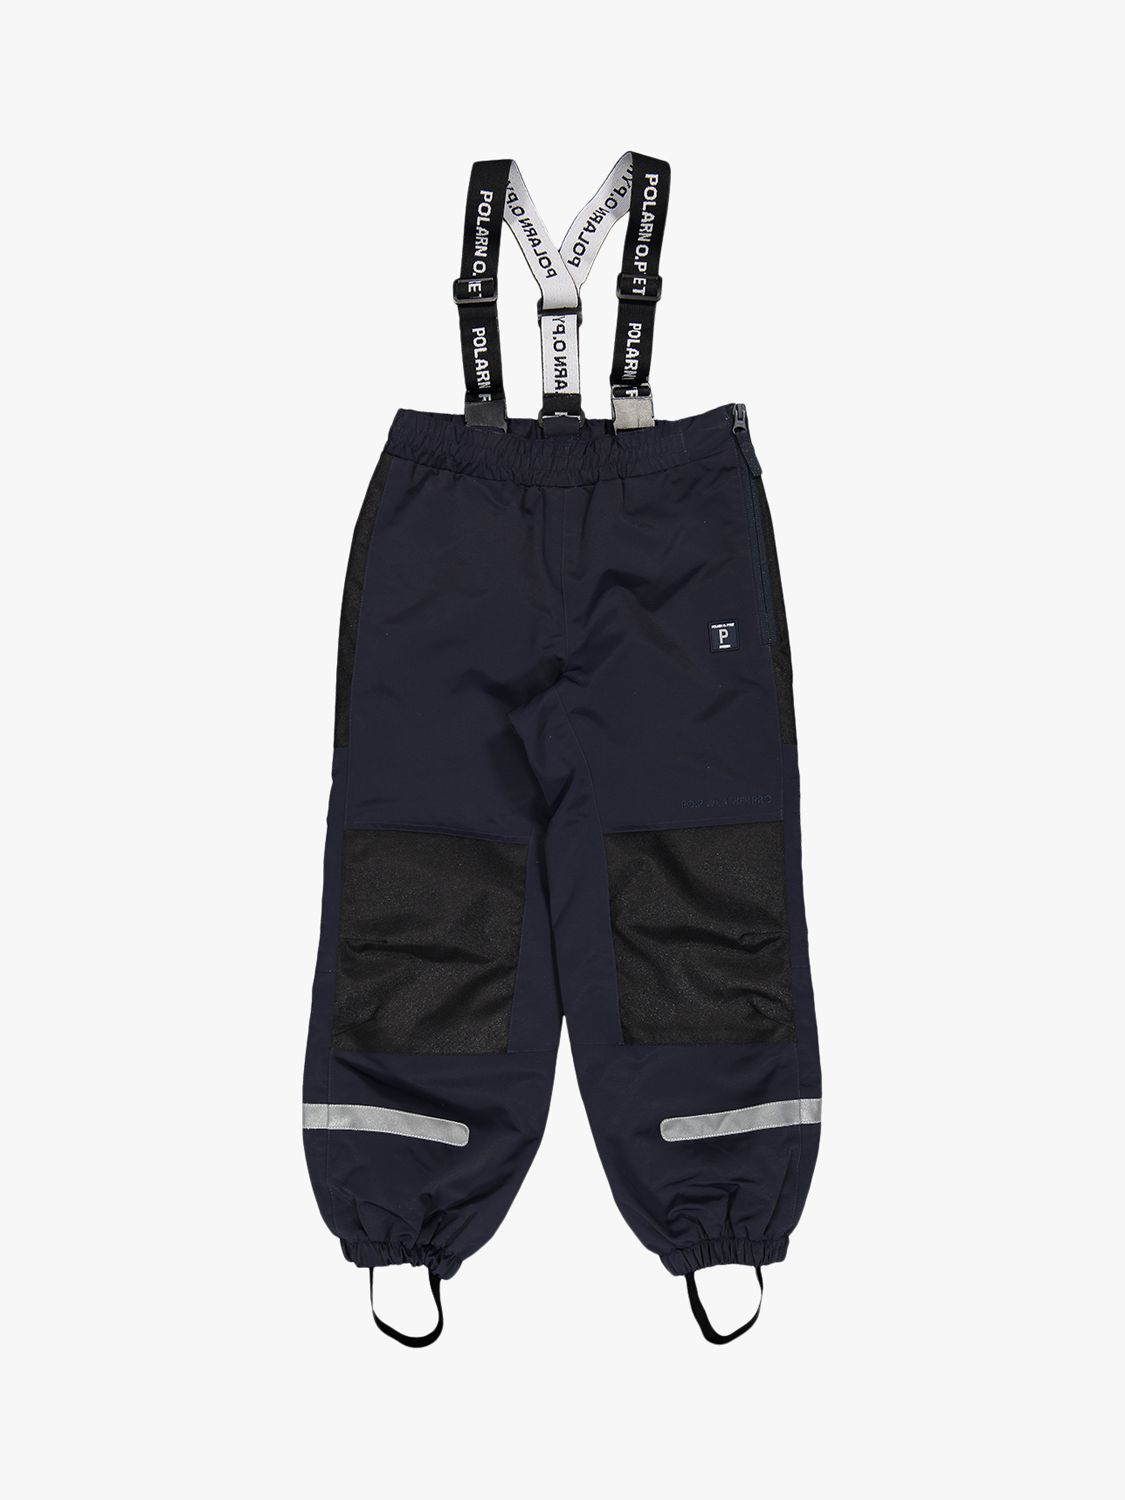 Polarn O. Pyret Kids' Waterproof Trousers, Blue, 2-3 years